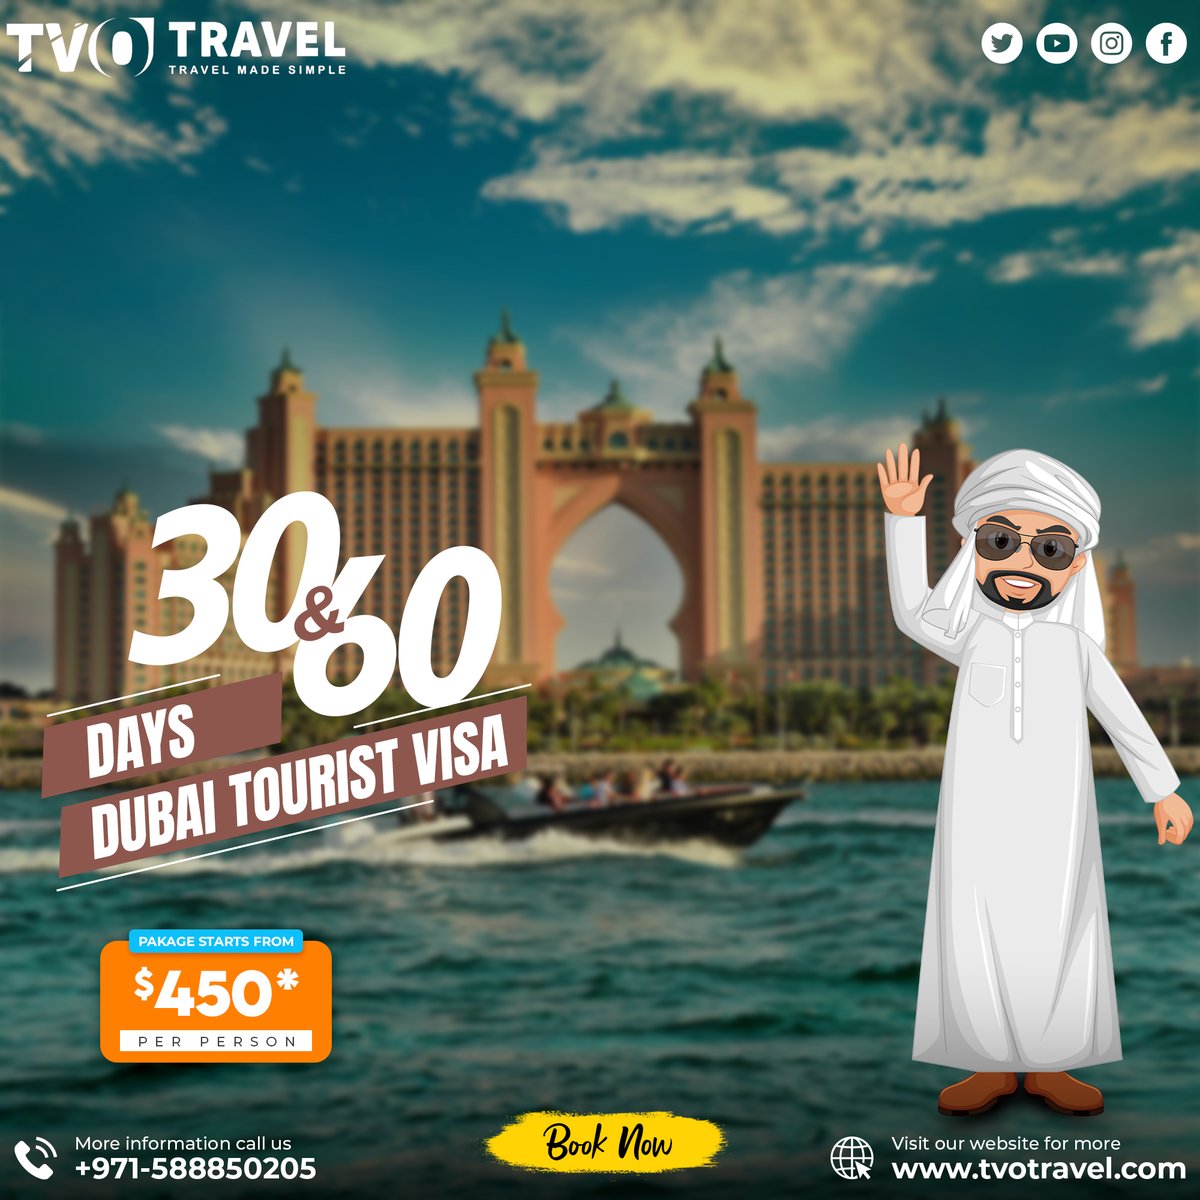 Get Your 30- and 60-Day Dubai Tourist Visa with TVO Travel!

tvotravel.com
#dubai #dubaivisa #tvotravel #exploredubai #VisaMagic #DubaiDreams #WanderlustJourney #touristvisa #discoverdubai